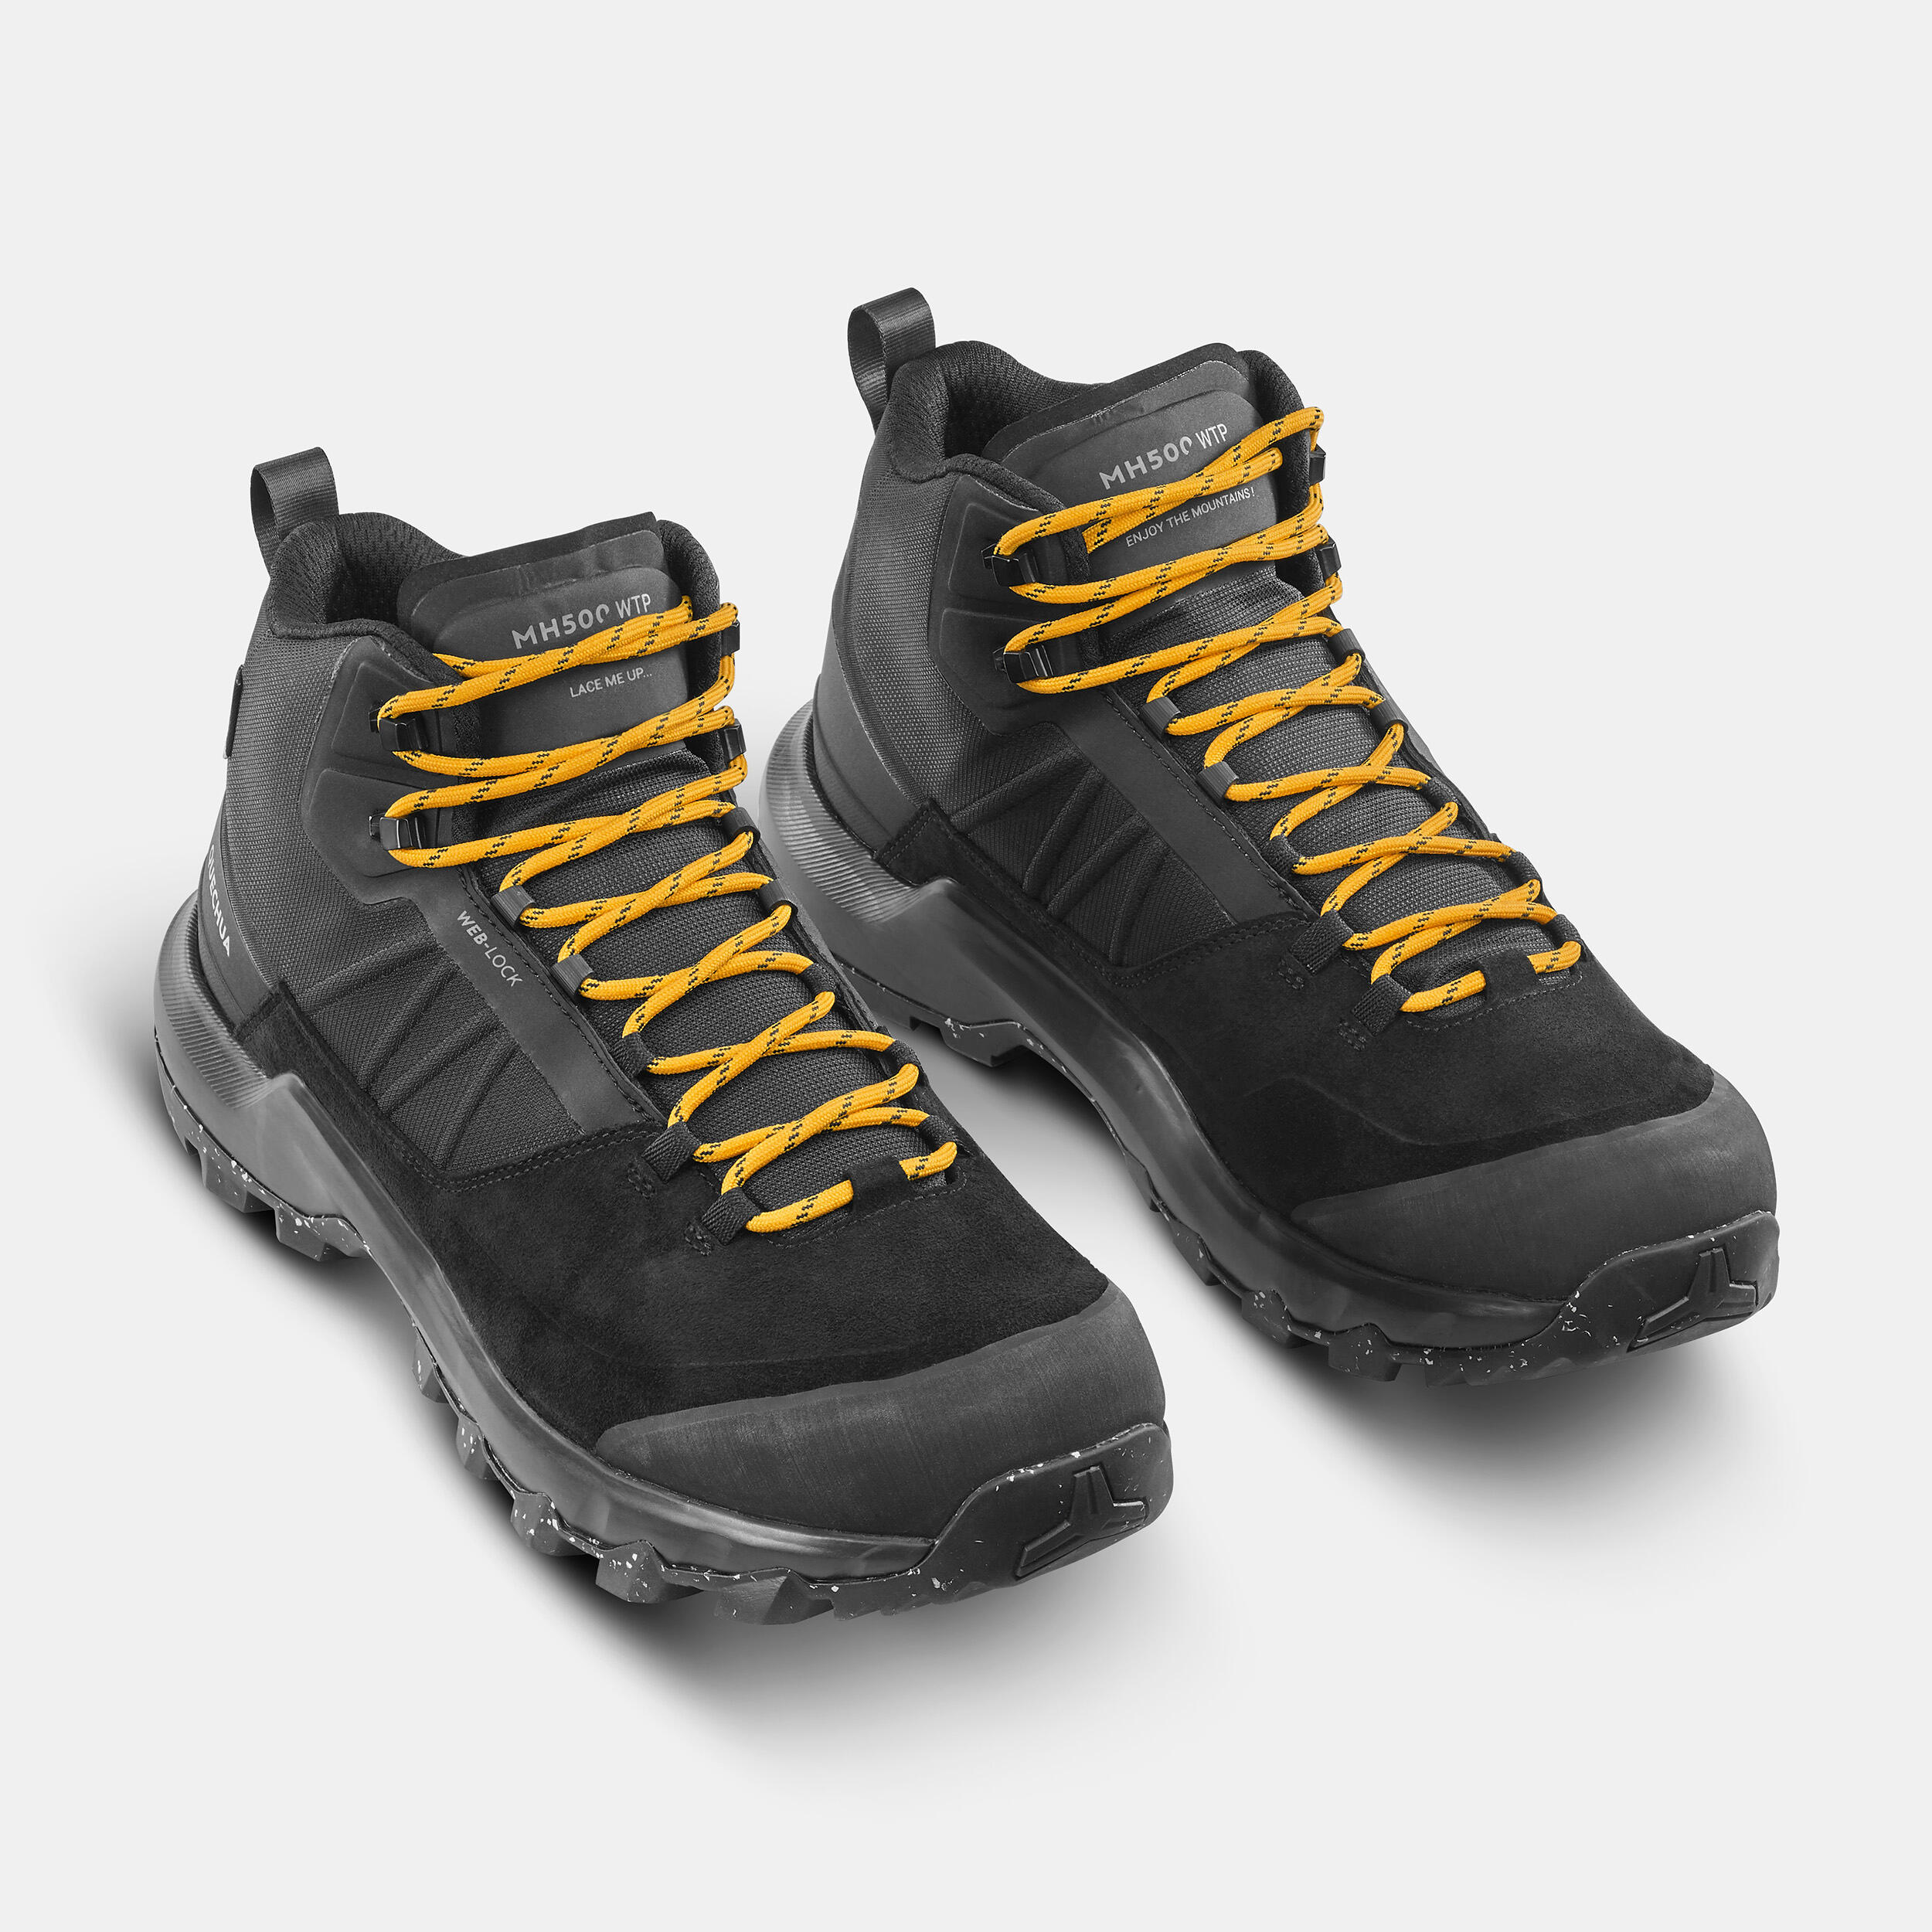 Men's Waterproof Mountain Walking Shoes - MH500 Mid - Black 6/7